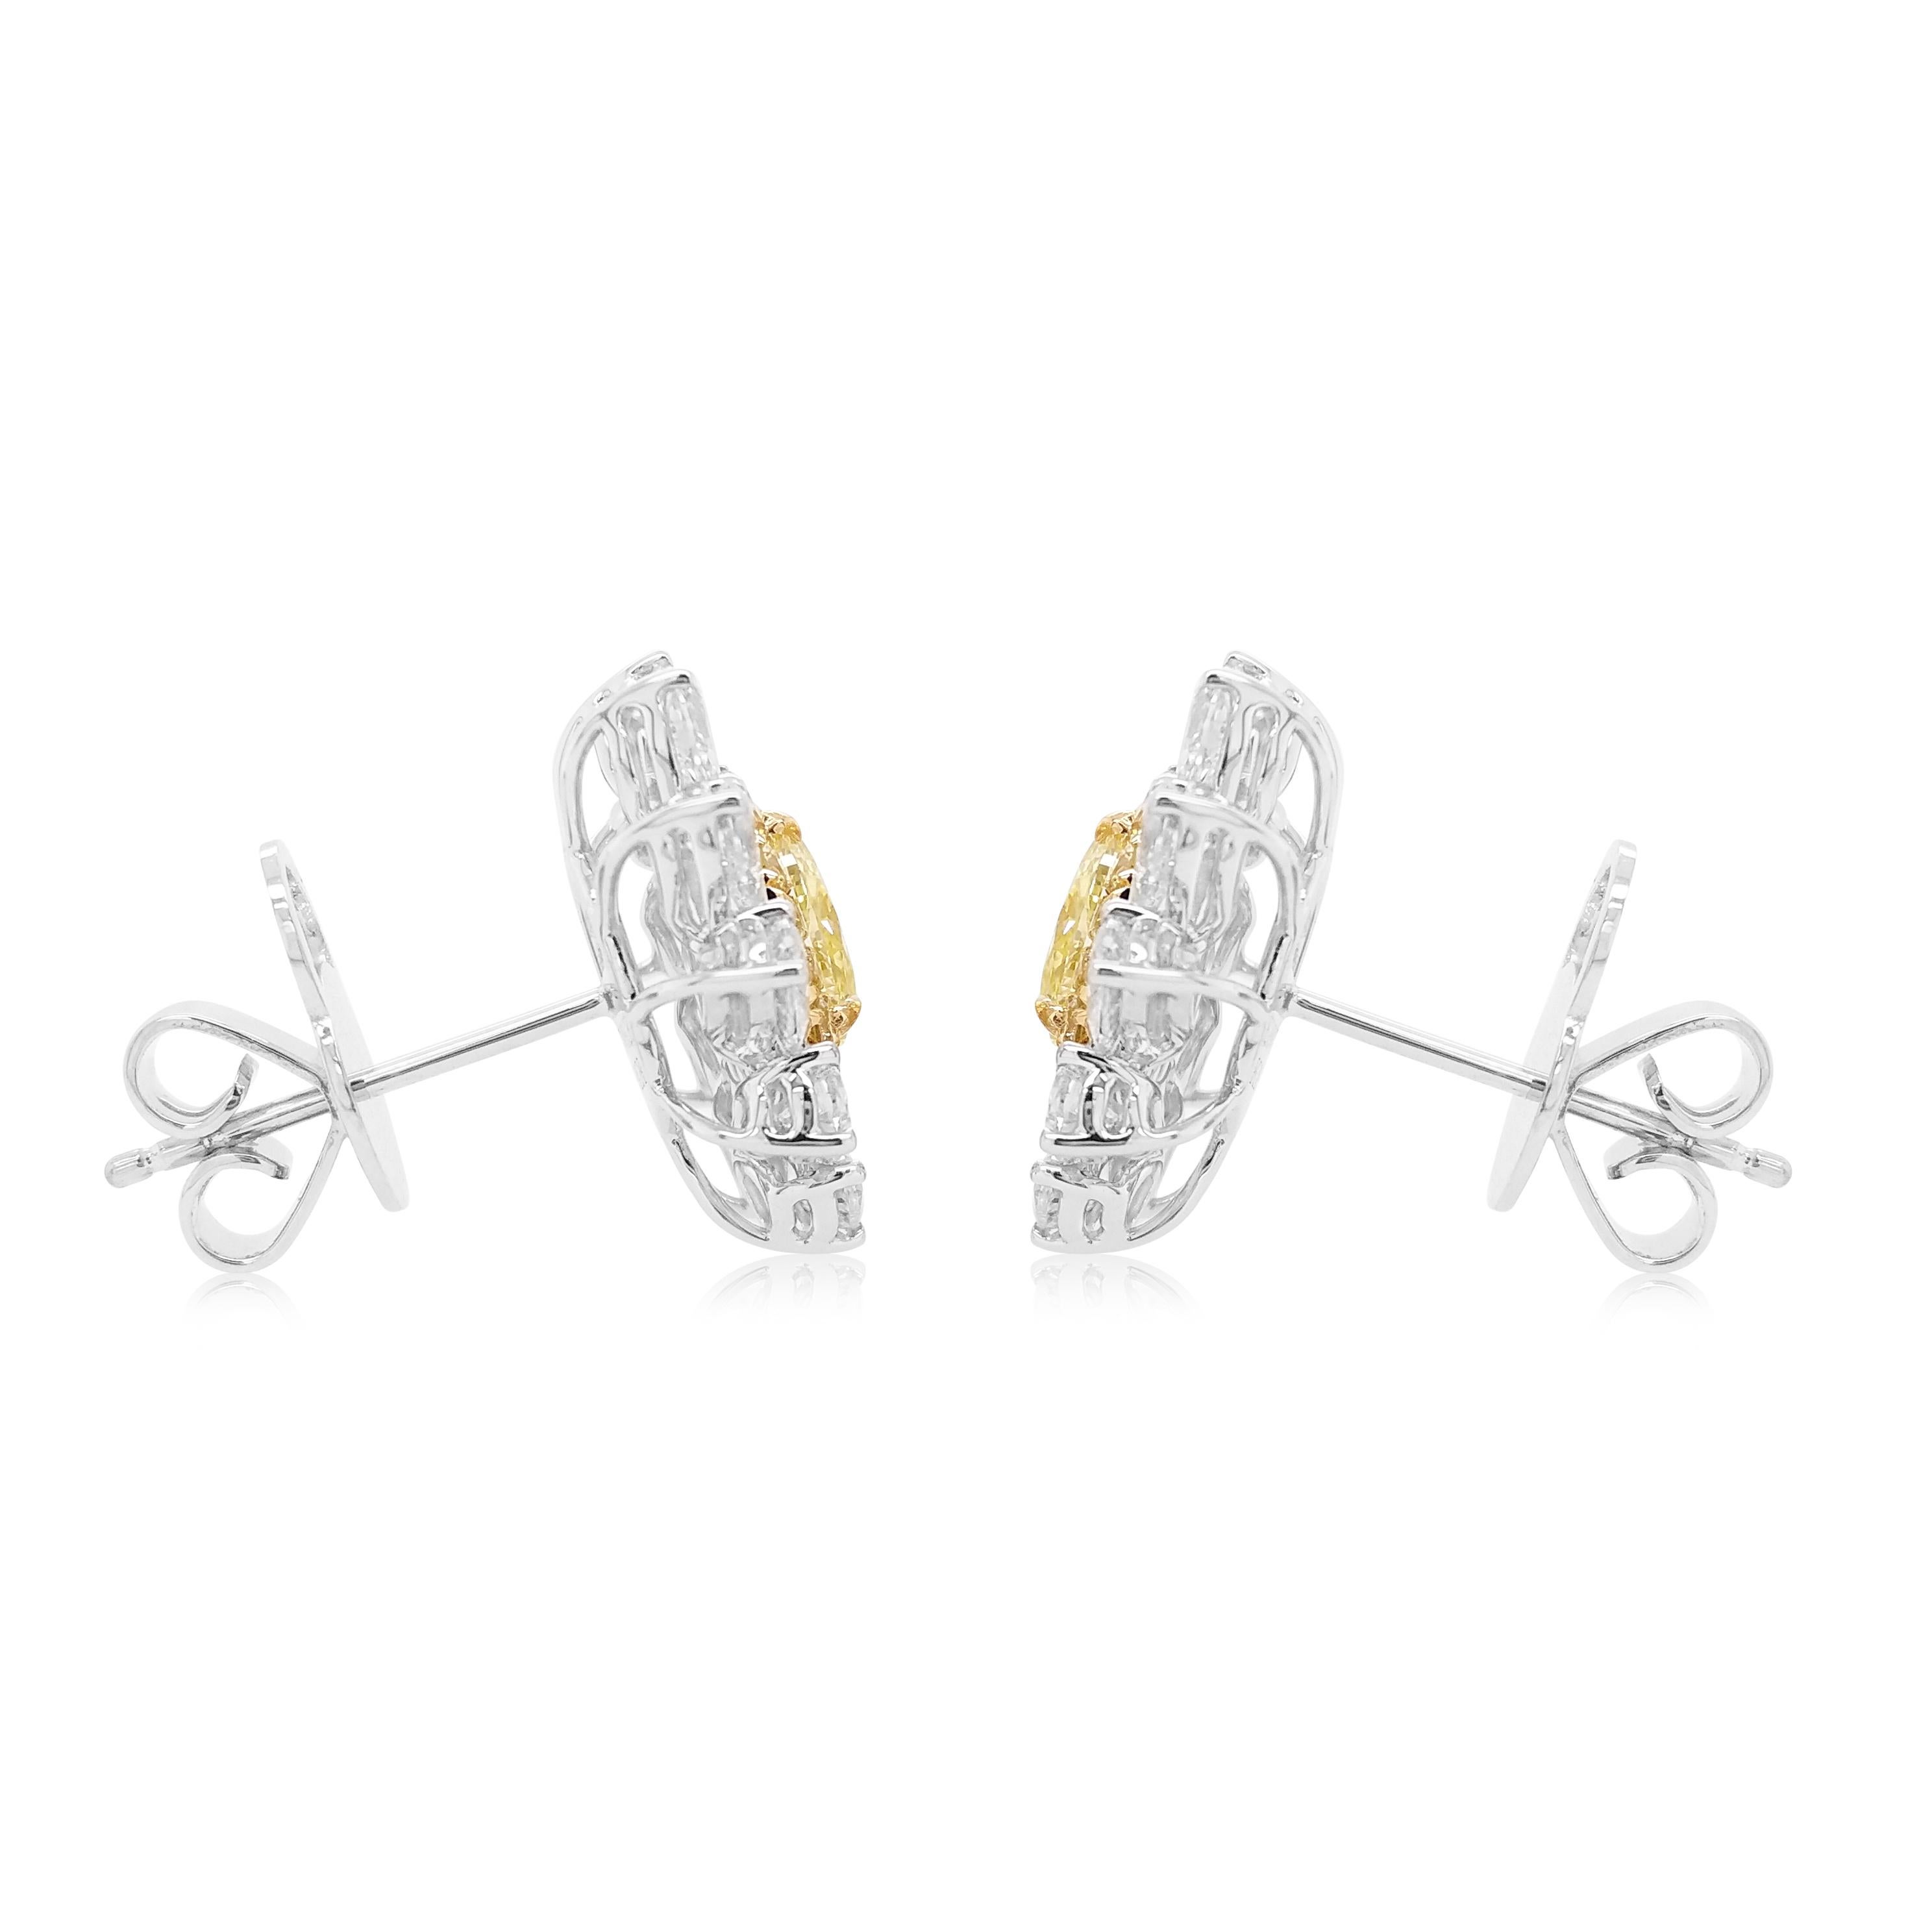 Oval Cut GIA Certified Yellow Diamond White Diamond 18K Gold Stud Earrings